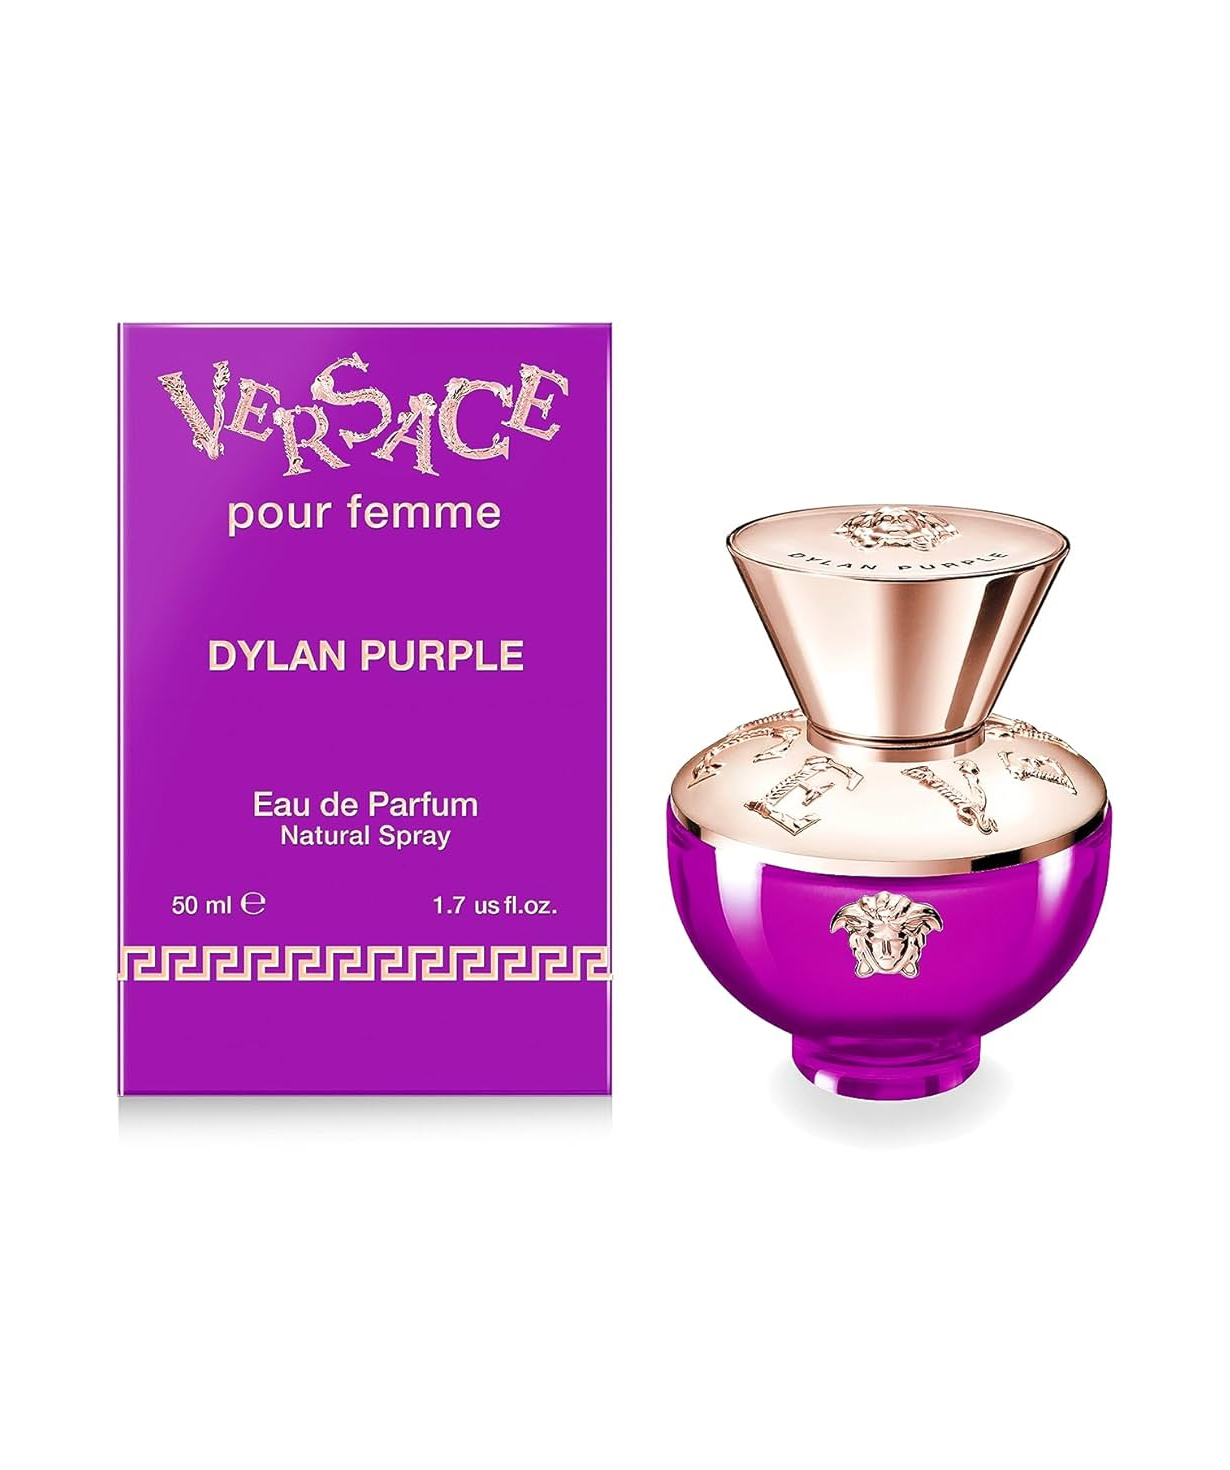 Perfume «Versace» Dylan Purple, for women, 50 ml